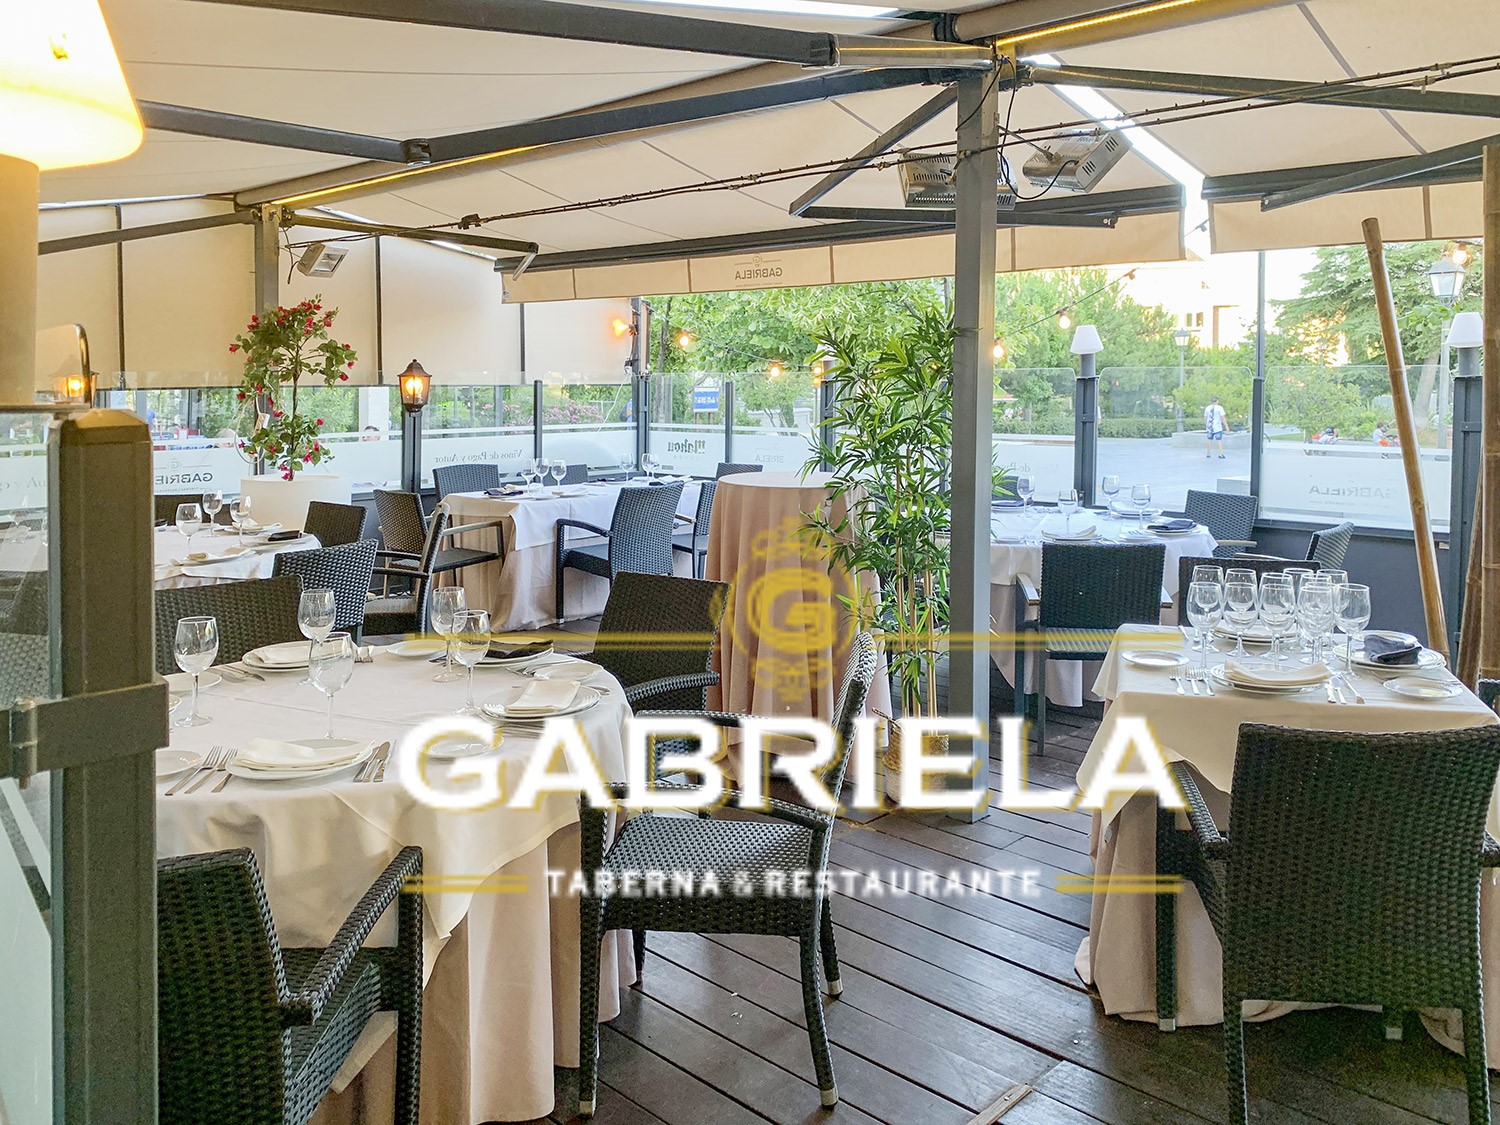 gabriela-taberna-mesa-habla-terraza-portada